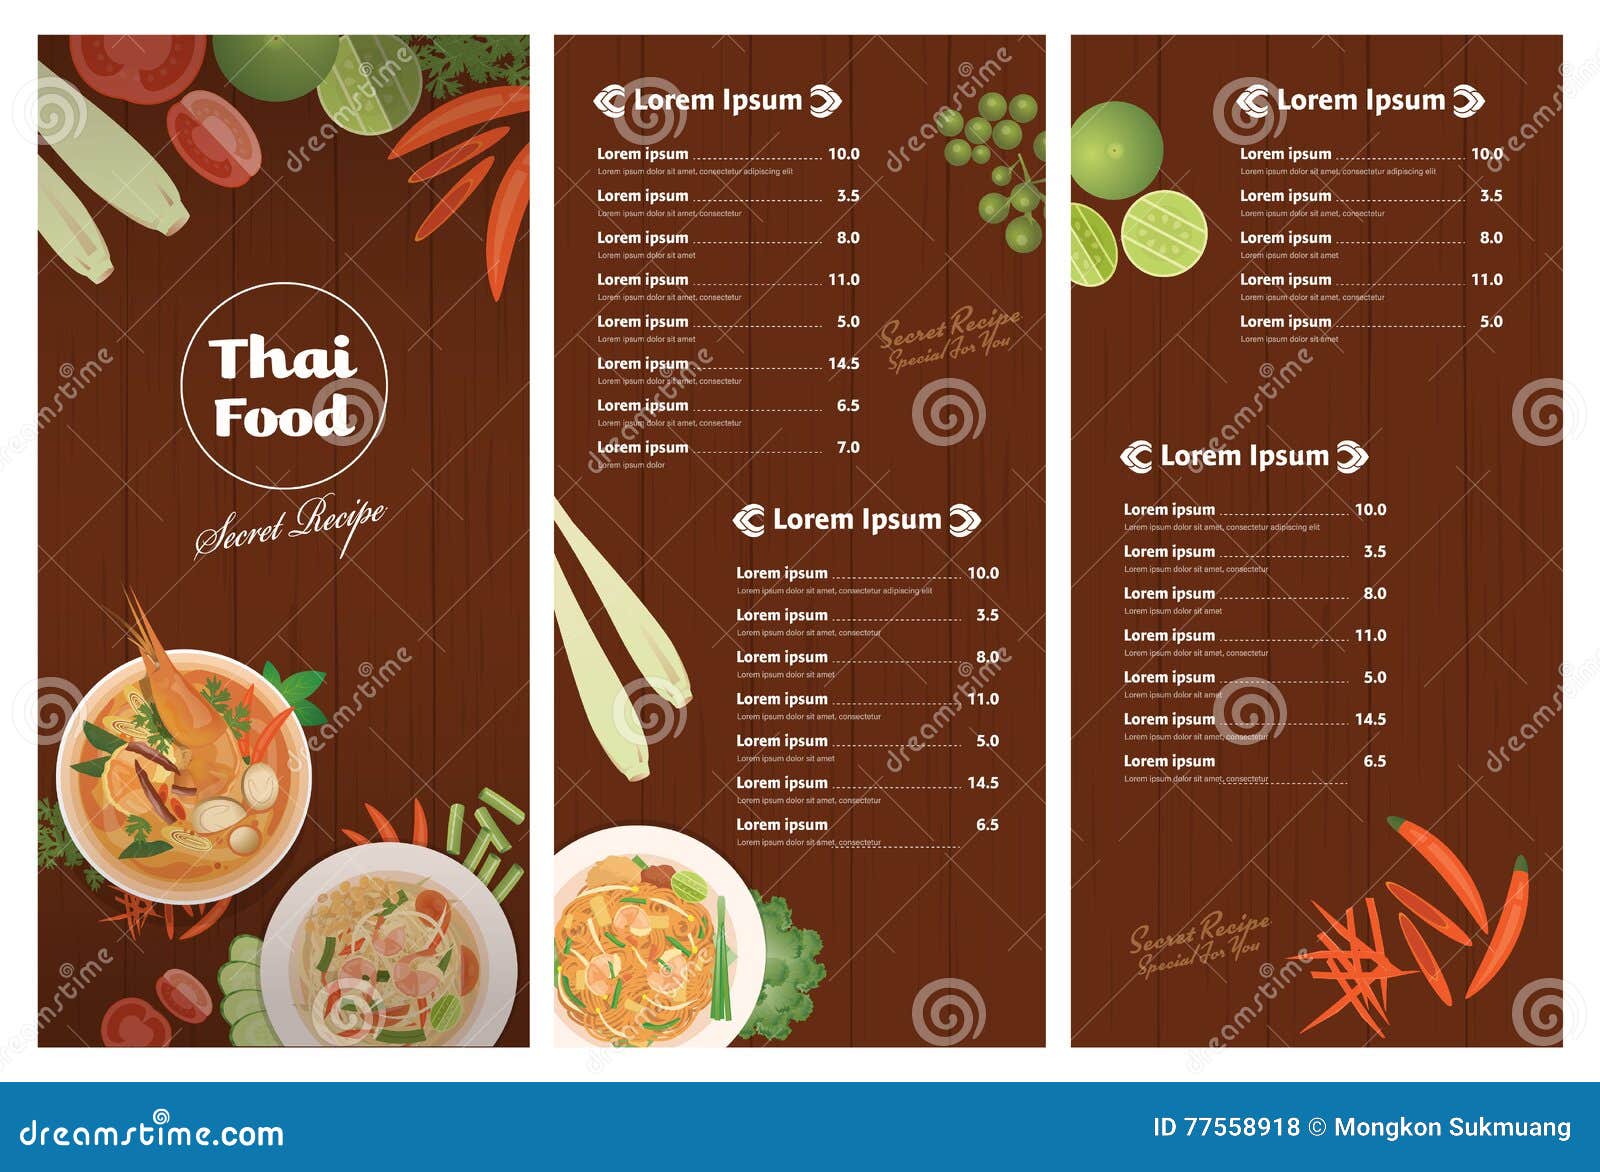 Vector of Thai Foods Restaurant Menu Template Stock Vector Inside Asian Restaurant Menu Template